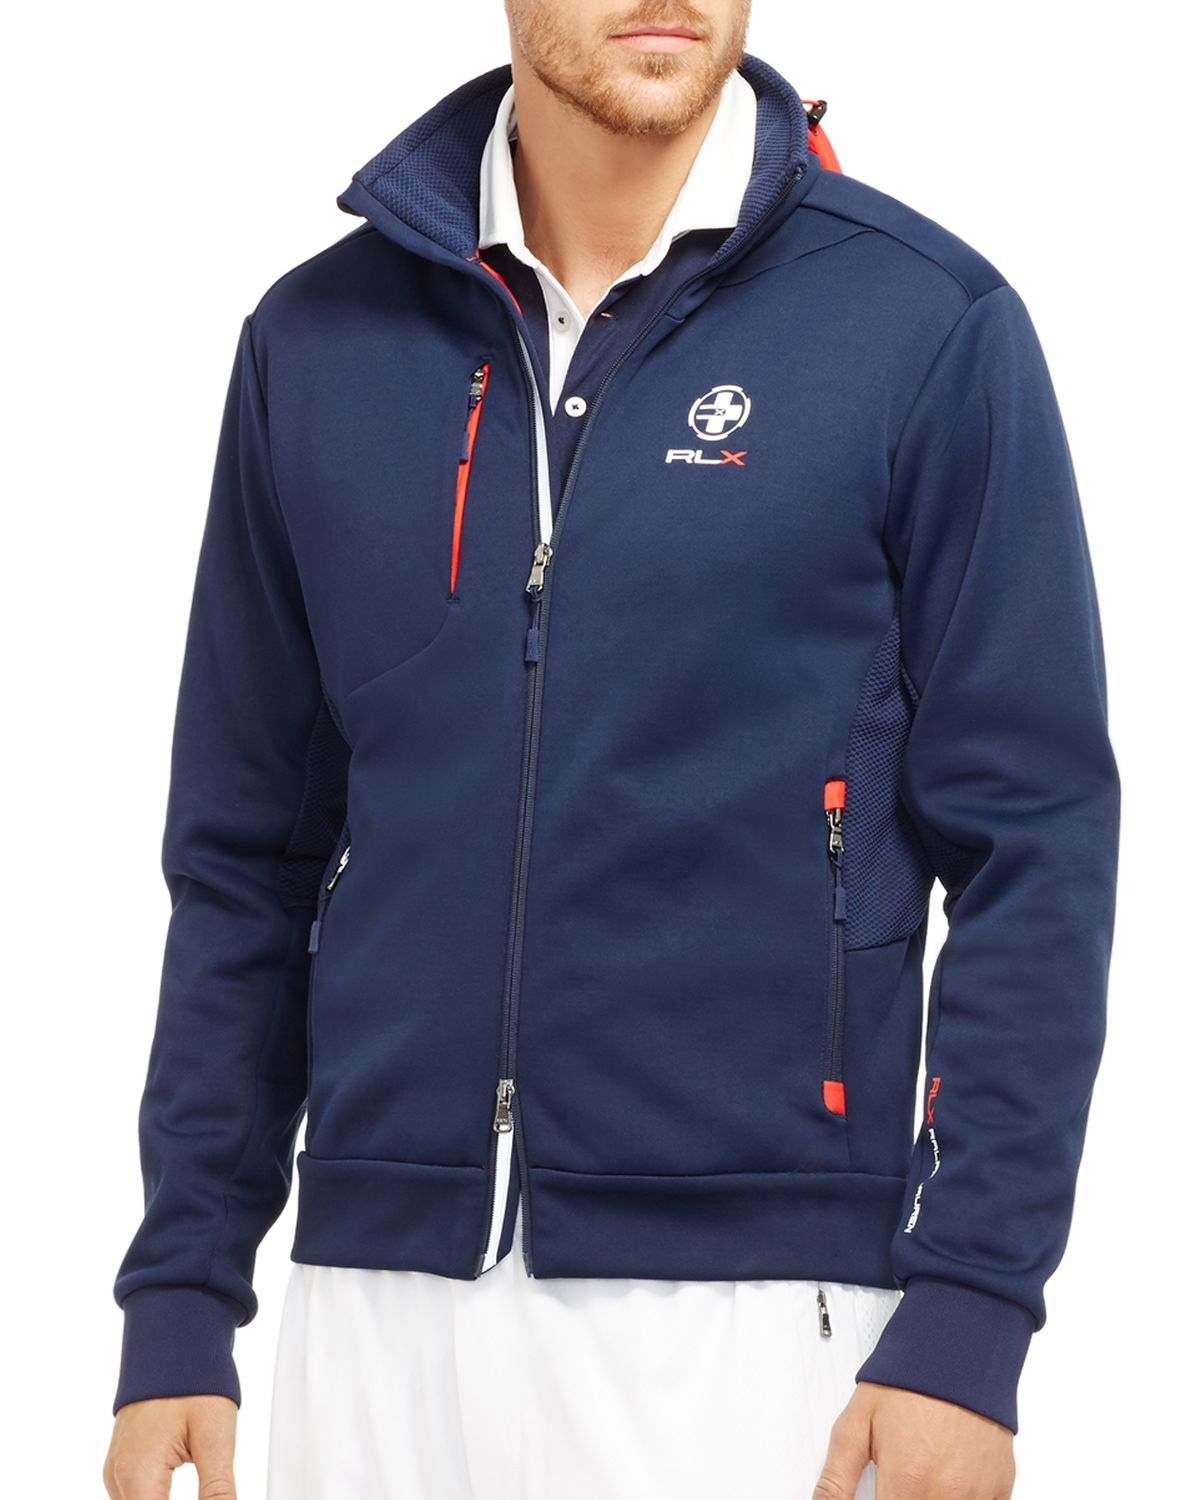 rlx polo sport jacket